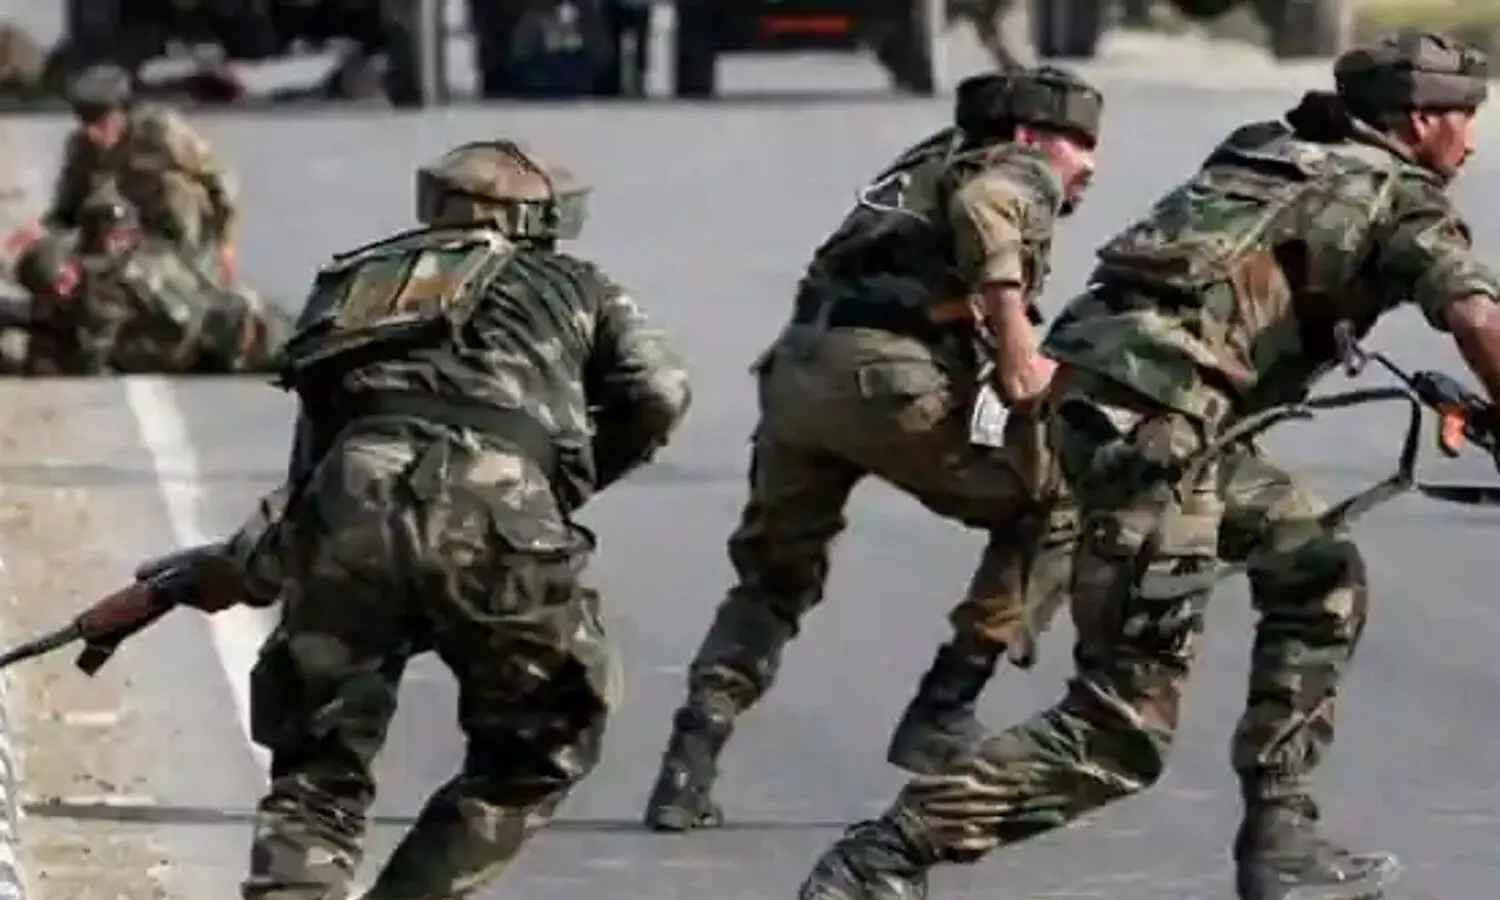 Jammu Kashmir Terrorist Attack: